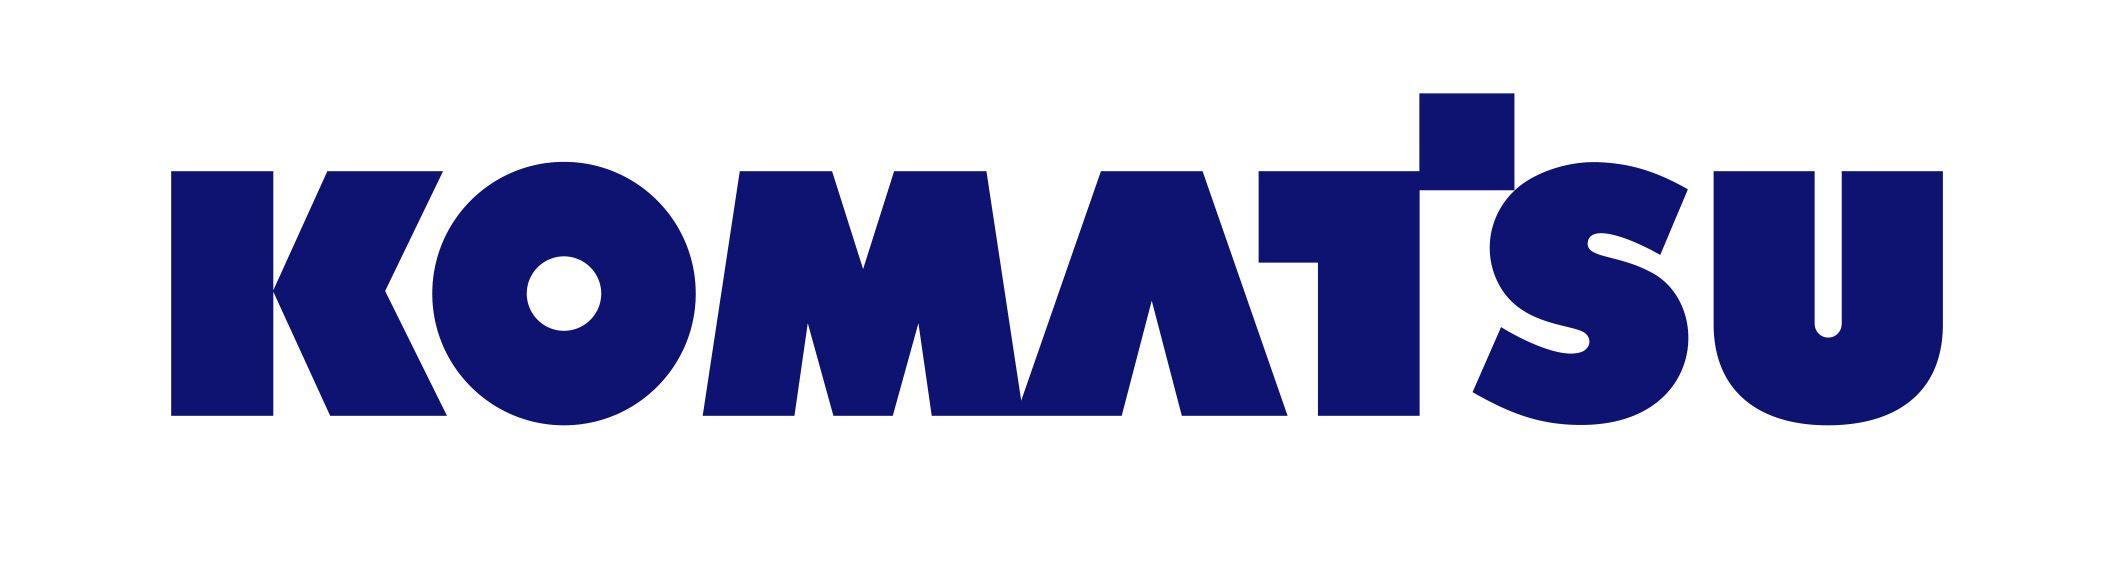 Komatsu Equipment Logo - Komatsu UK Ltd: Construction Equipment Association